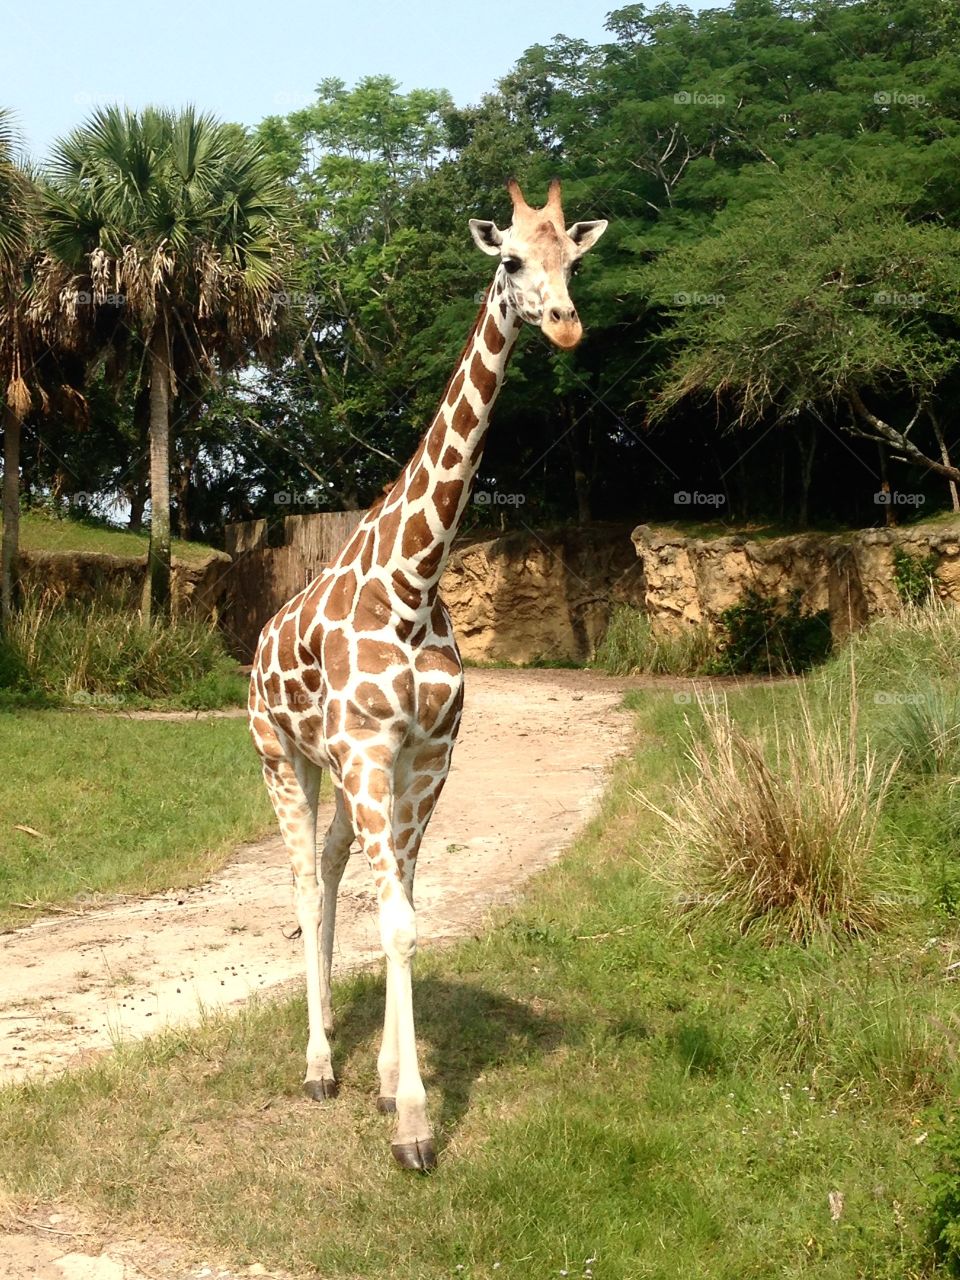 Giraffe . Photo of giraffe taken on safari ride in Disney's Animal Kingdom